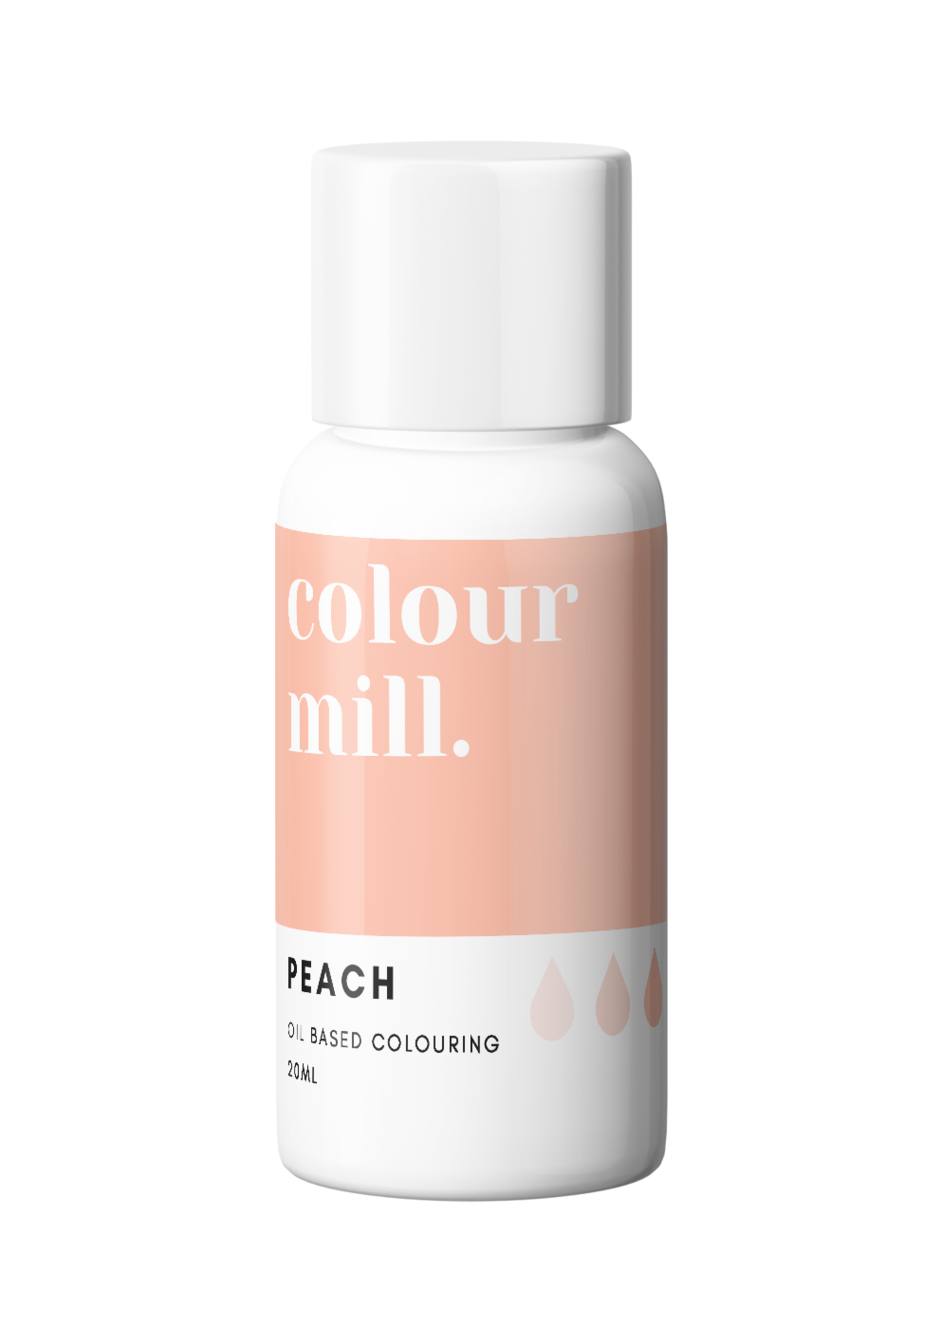 Peach, 20ml, Colour Mill Oil Based Colouring